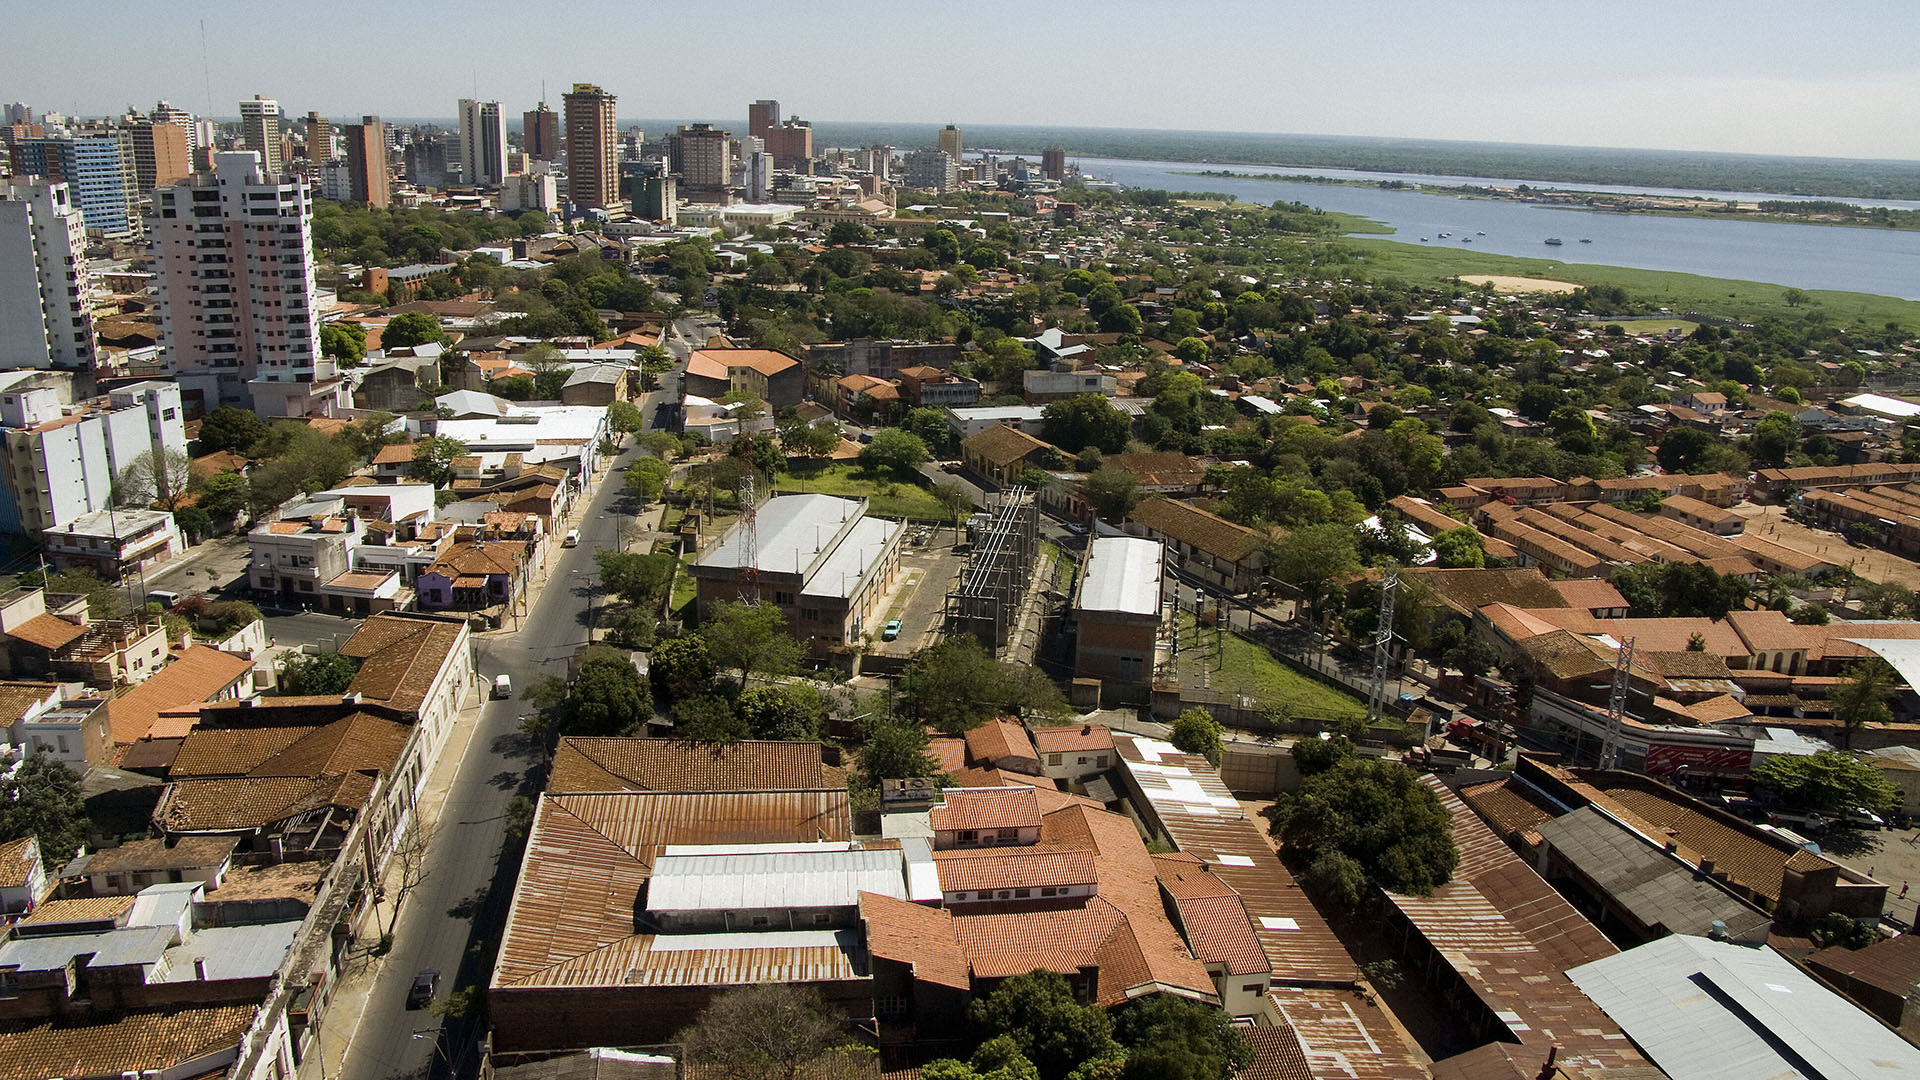 Blick auf die Stadt Asunción (Paraguay) | imago images/Jose Enrique Molina